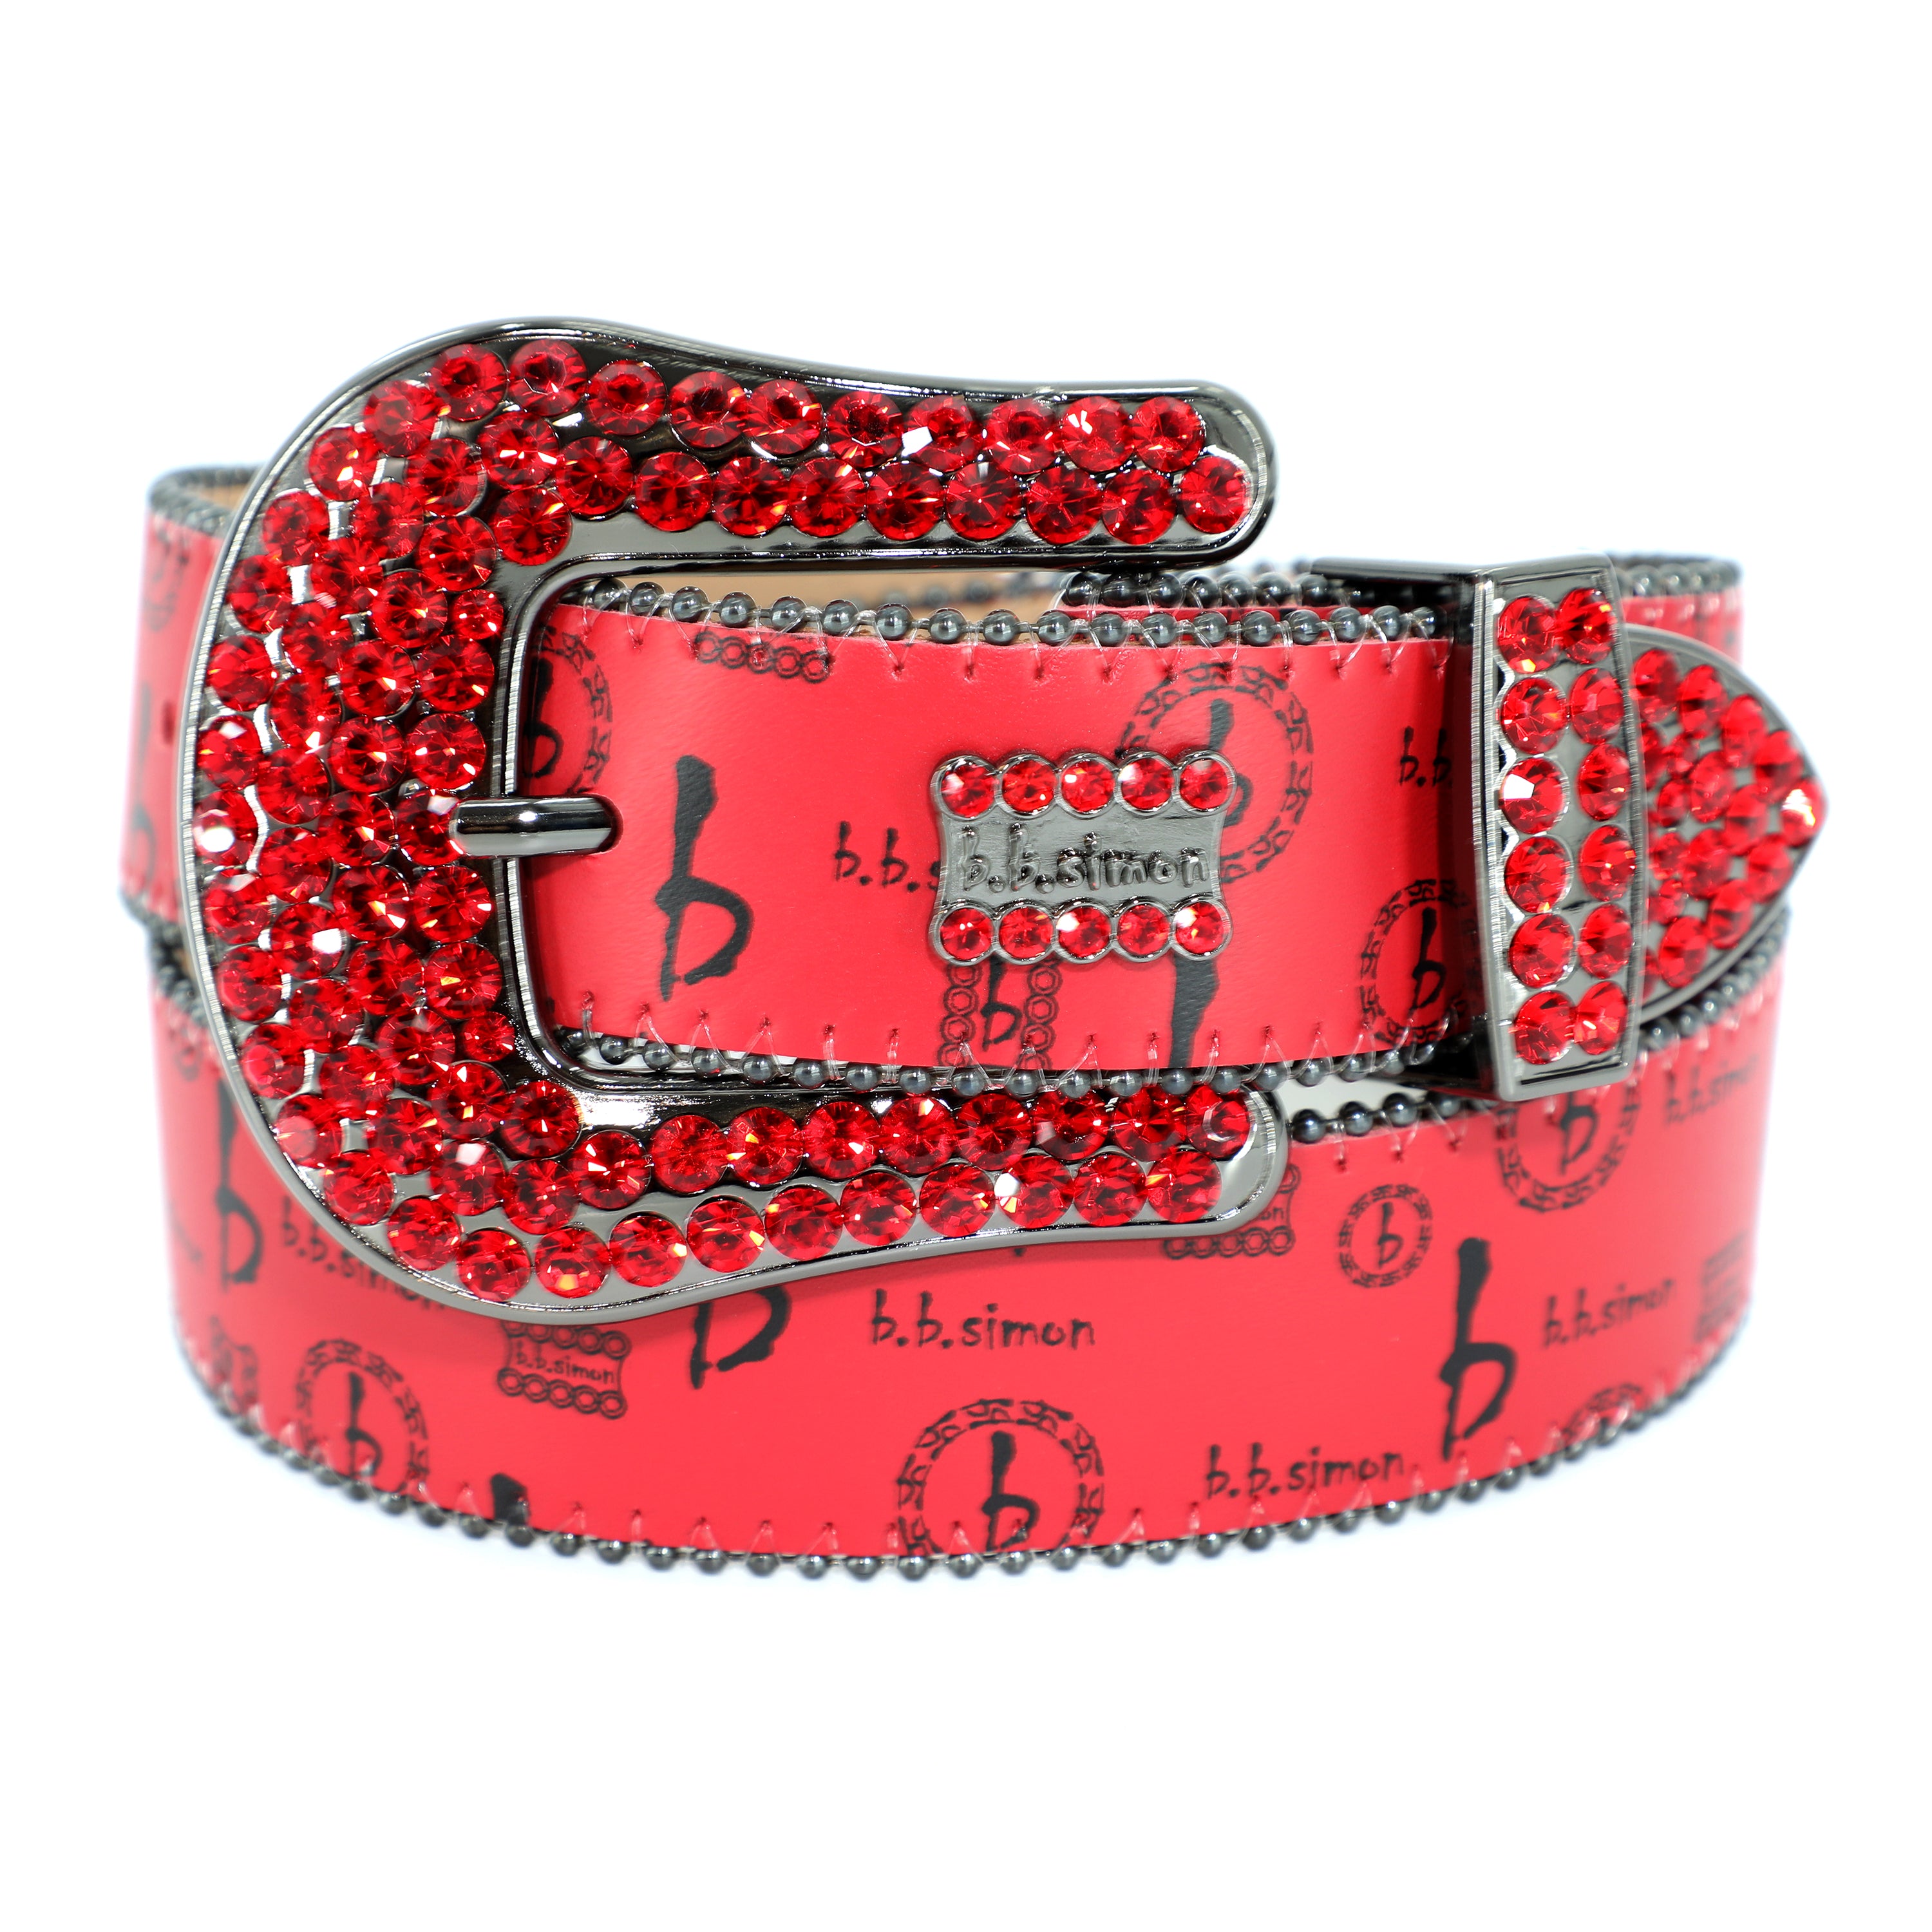 B.B. Simon Monogram Belt - Red 40 / Red